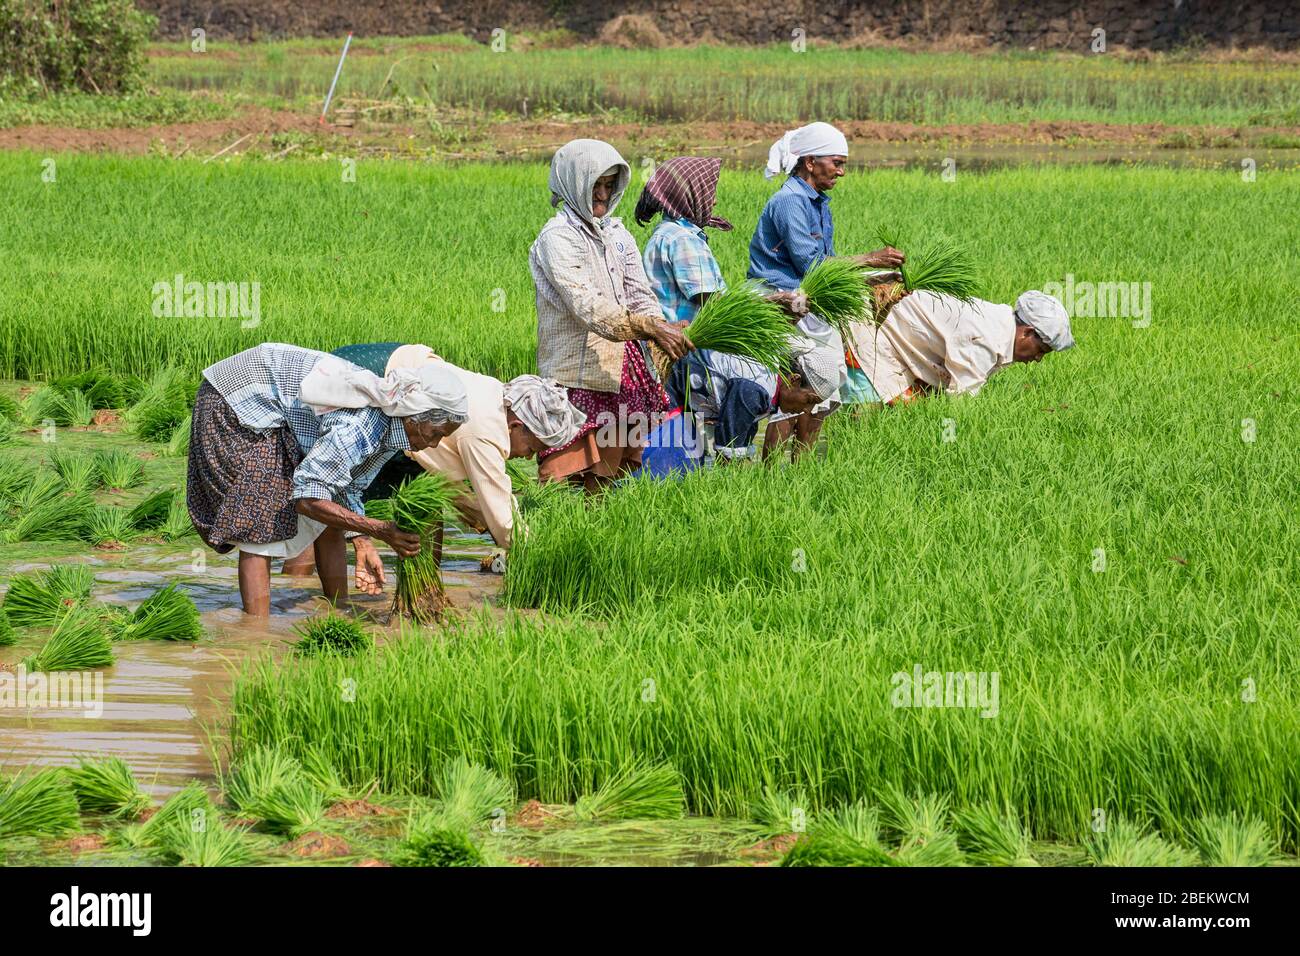 Arbeiterinnen arbeiten auf dem Reisfeld Felder in Kerala, Südindien, Indien, Asien, Landwirtschaft in Indien, Kerala, Reisanbau, pradeep Subramanian Stockfoto